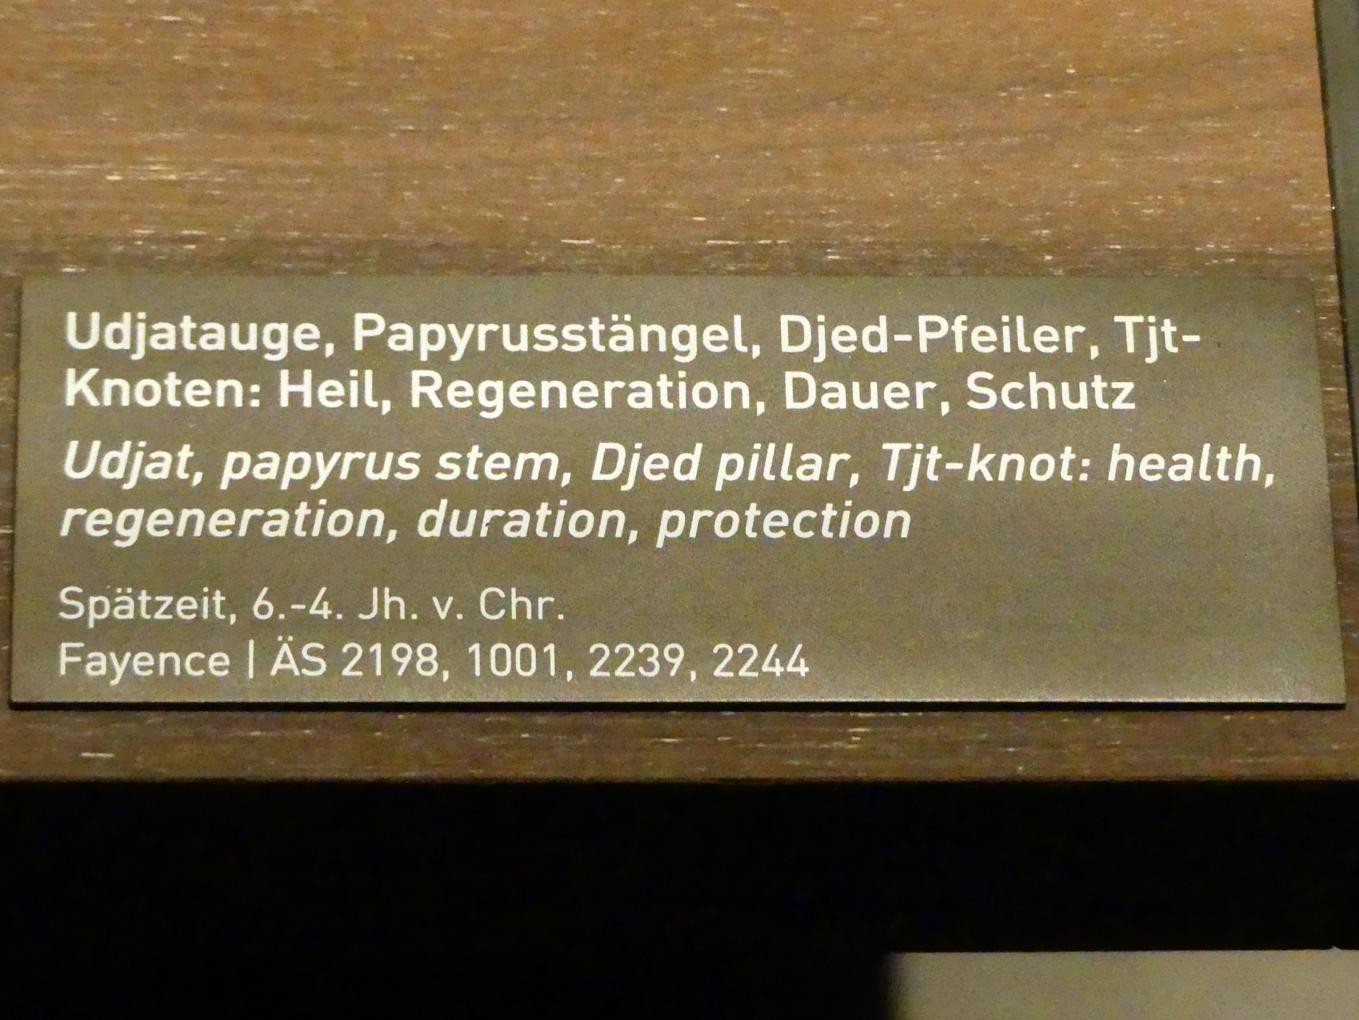 Tjt-Knoten: Schutz, Spätzeit, 360 - 342 v. Chr., 600 - 300 v. Chr., Bild 2/2